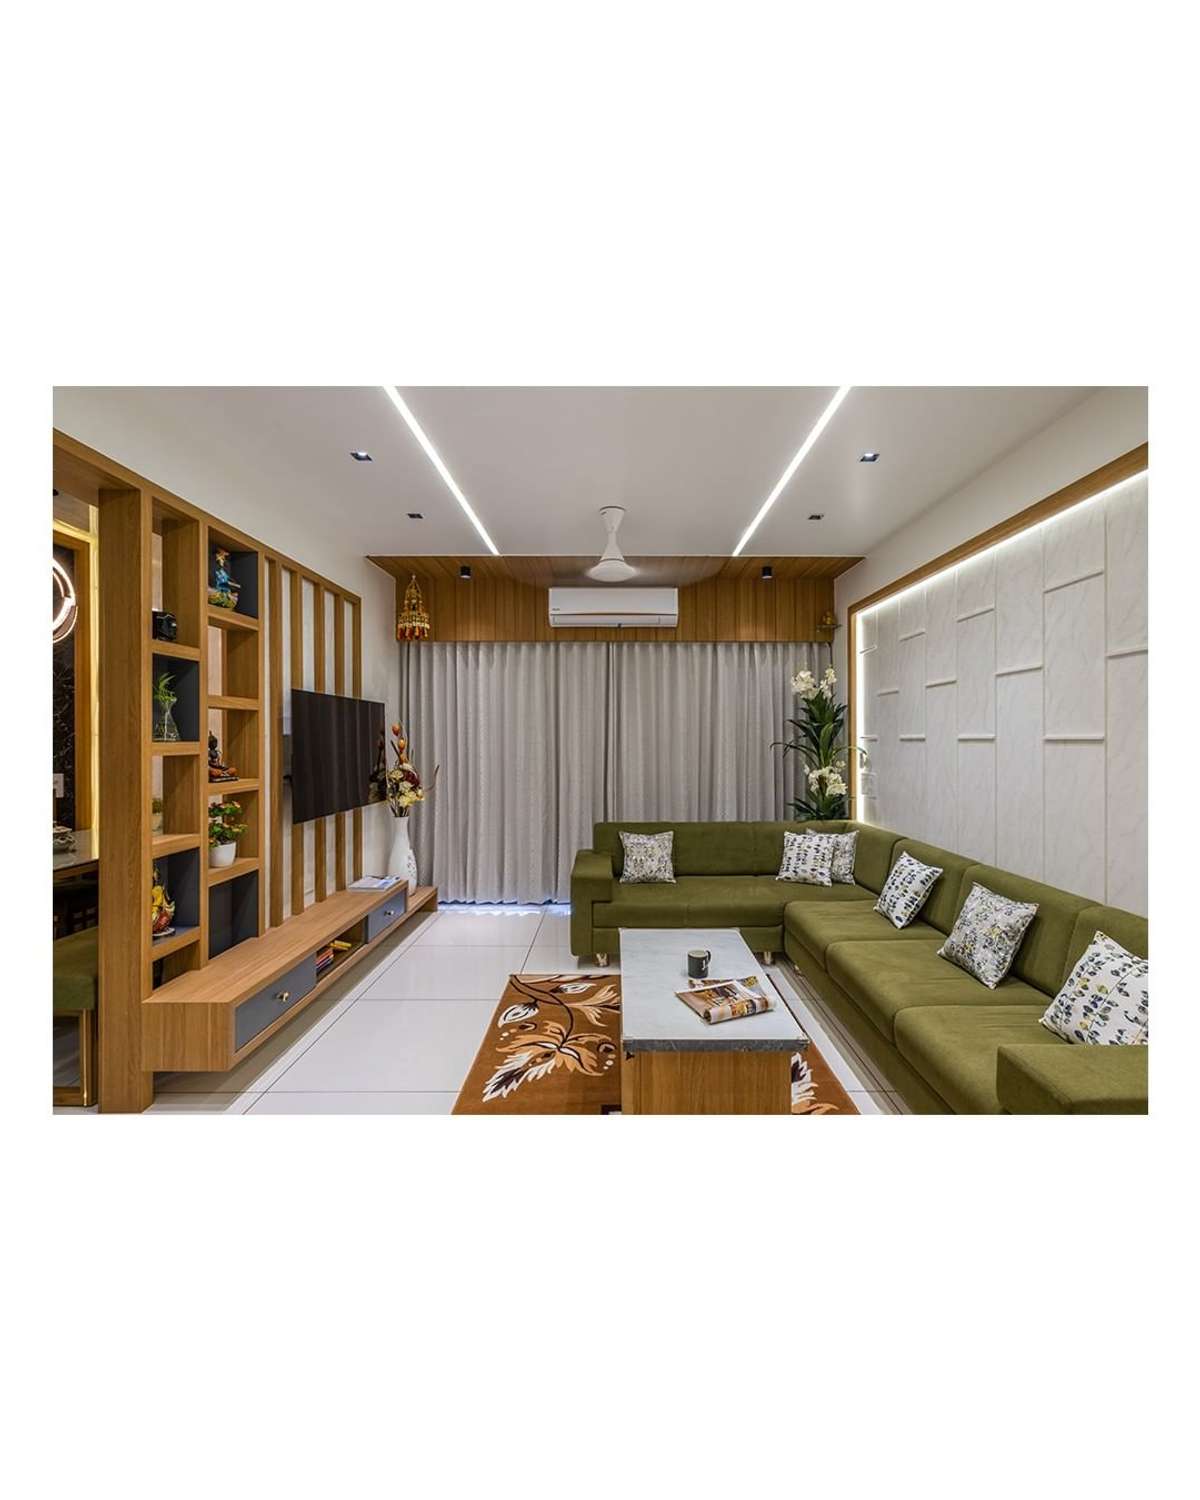 living area design



#LivingroomDesigns #LivingRoomCarpets #LivingRoomSofa #LivingroomTexturePainting #LivingRoomTVCabinet